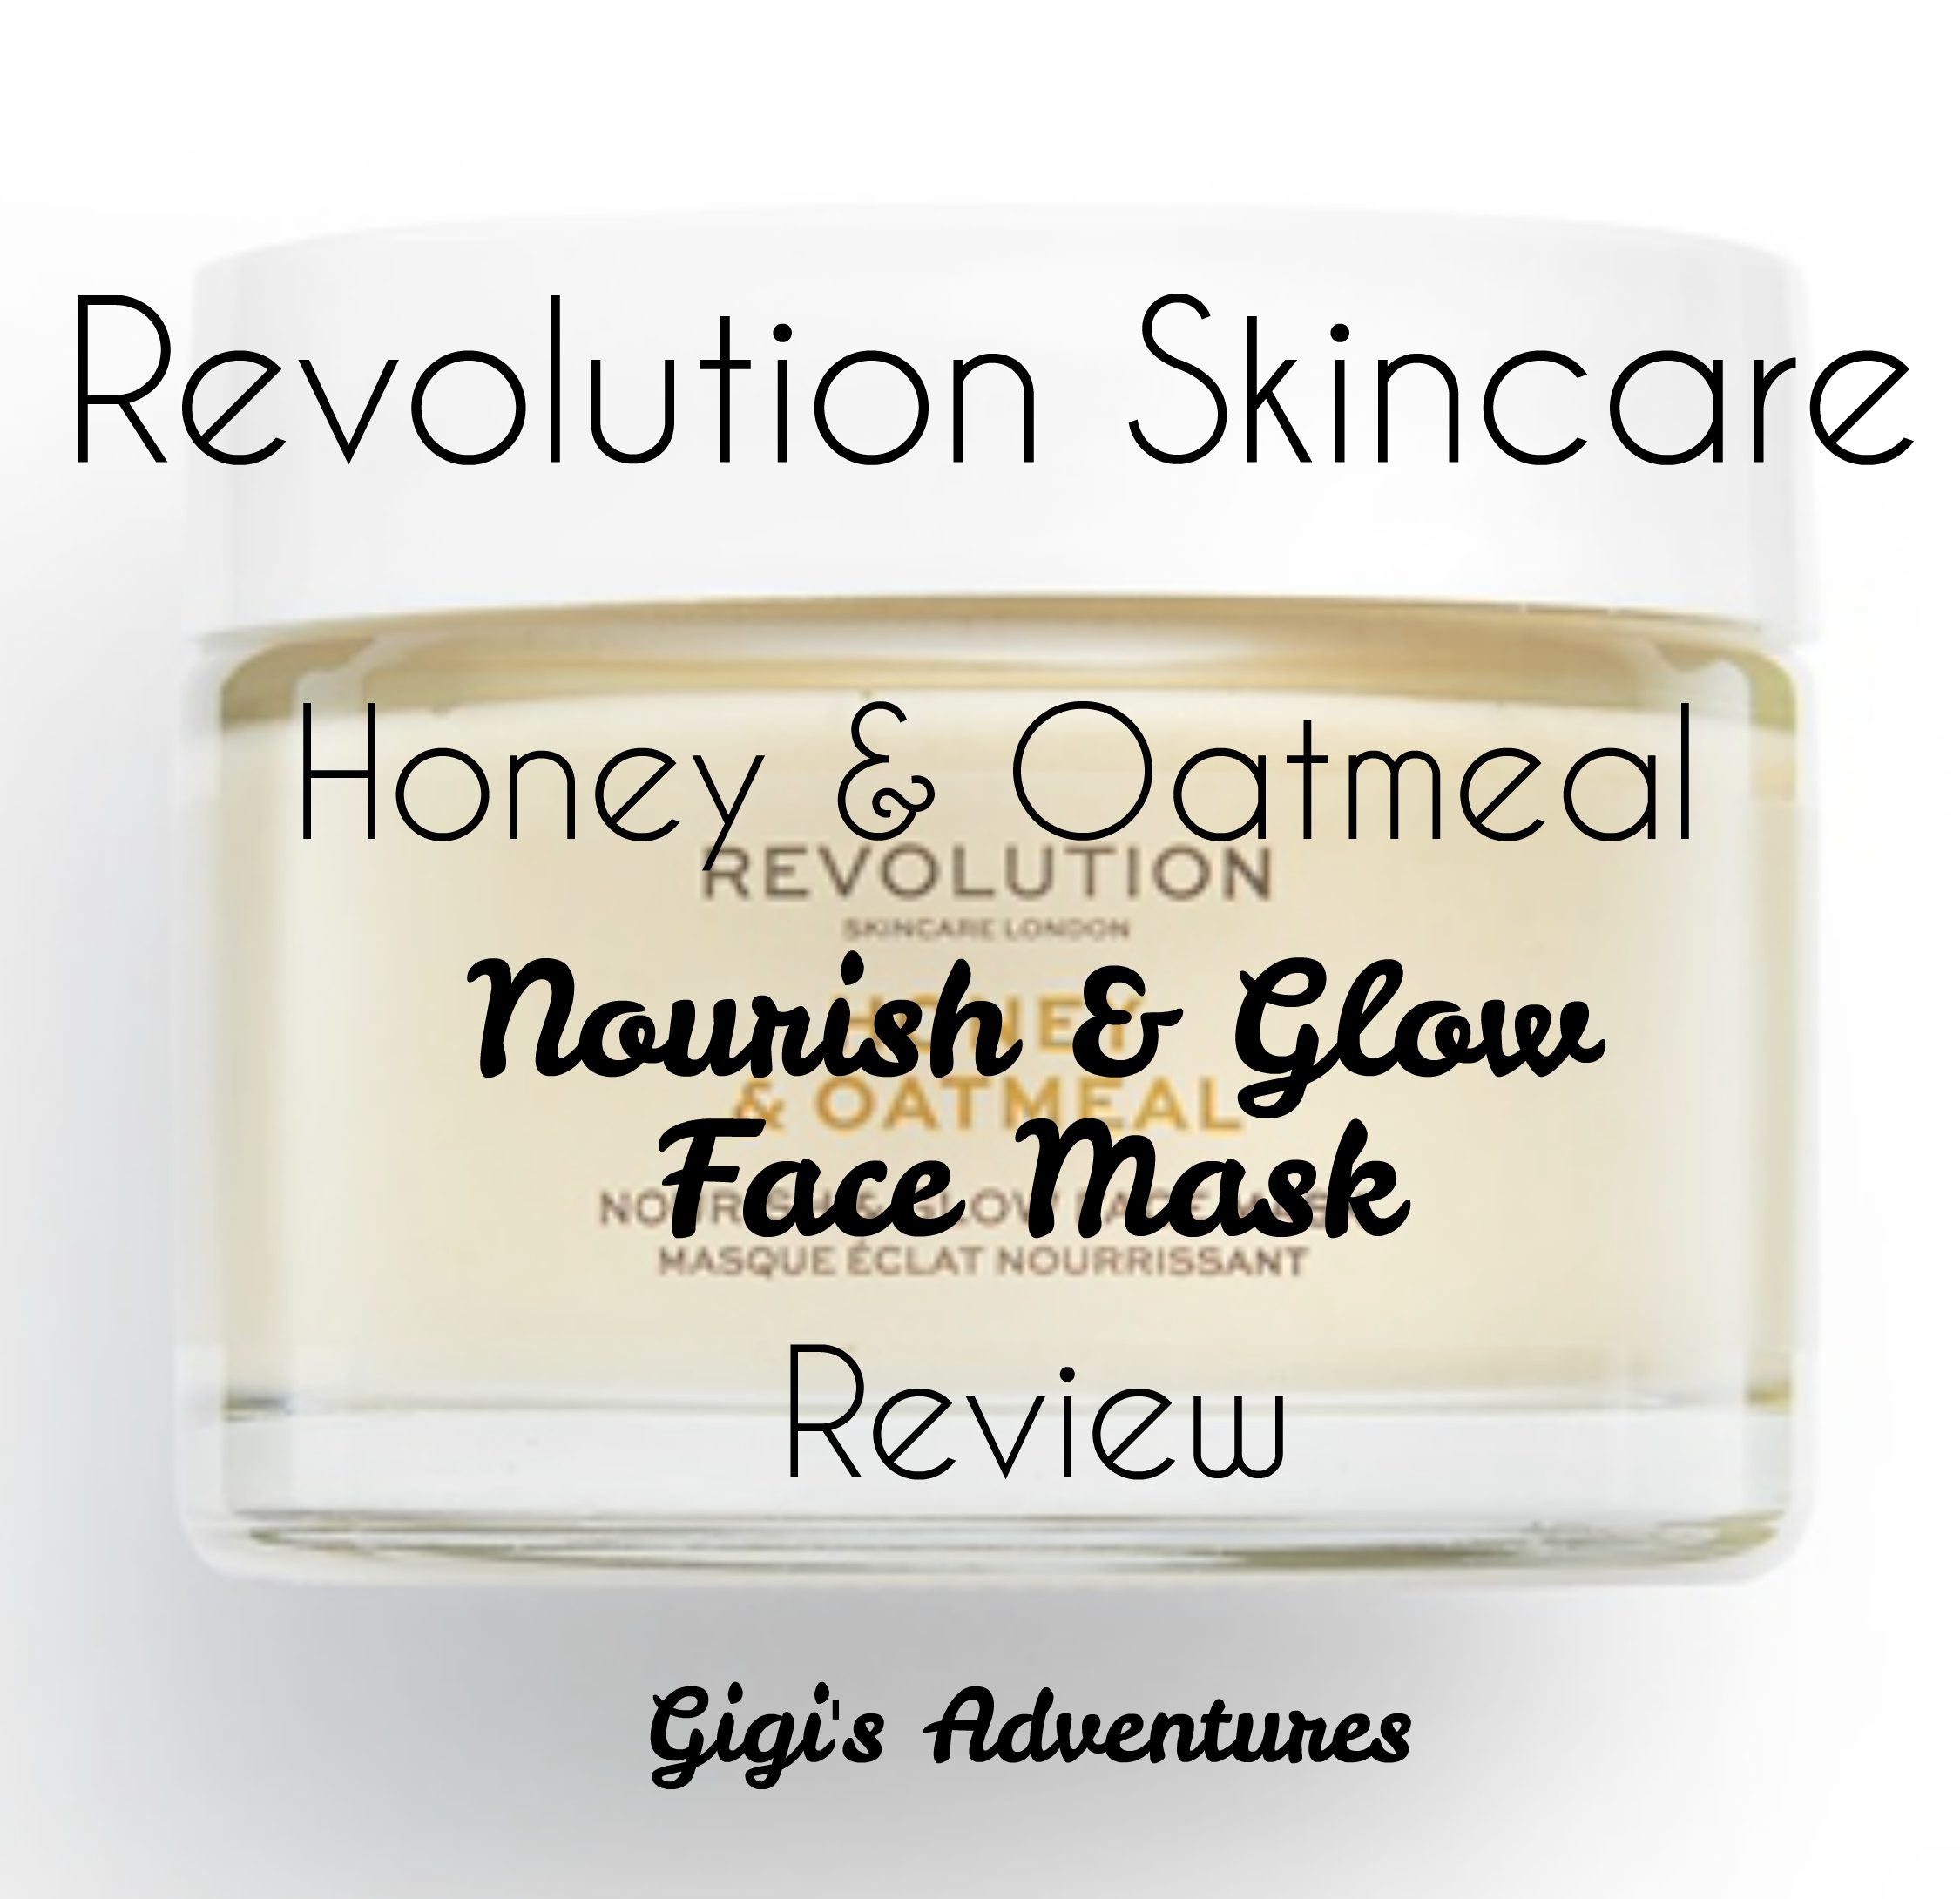 Revolution Skincare Honey & Oatmeal Nourish & Glow Face Mask Review